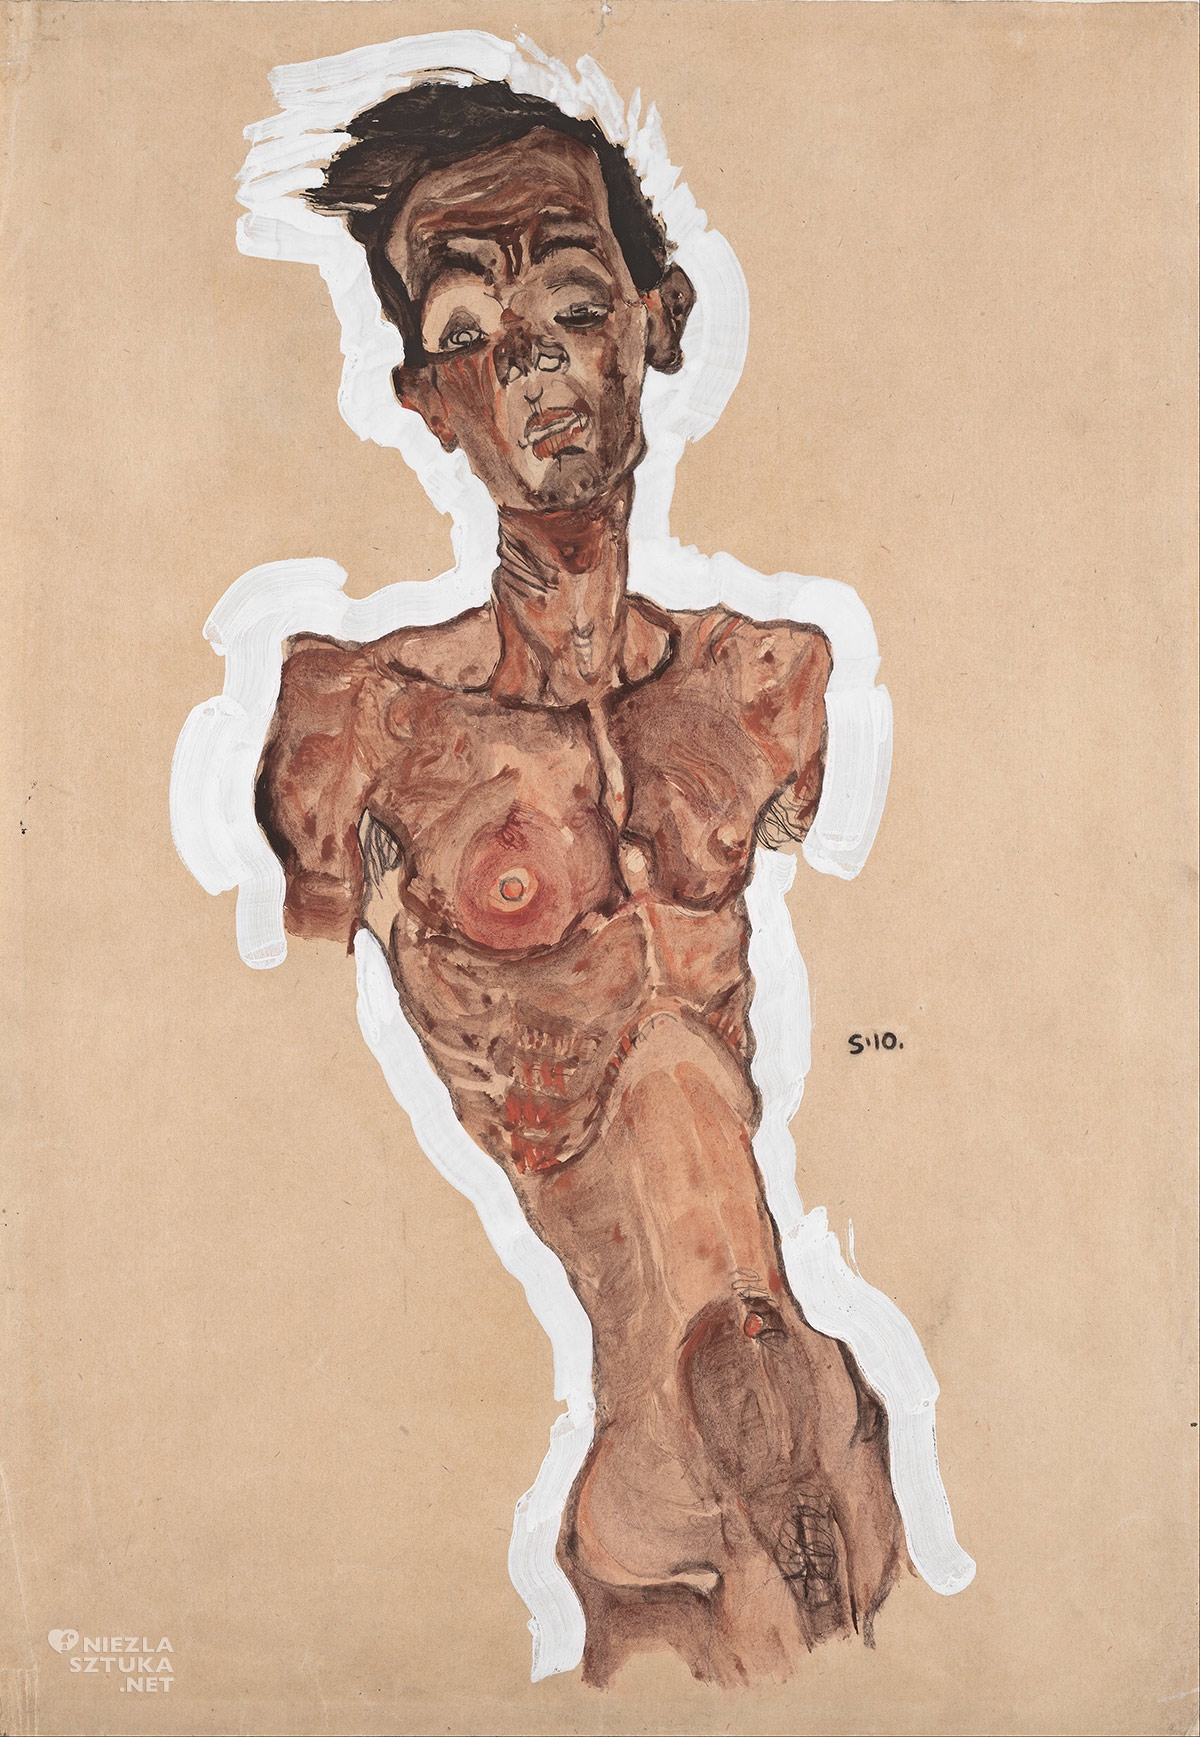 Egon Schiele, Nagi Autoportret, Akt, Autoportret artysty, sztuka austriacka, Niezła Sztuka